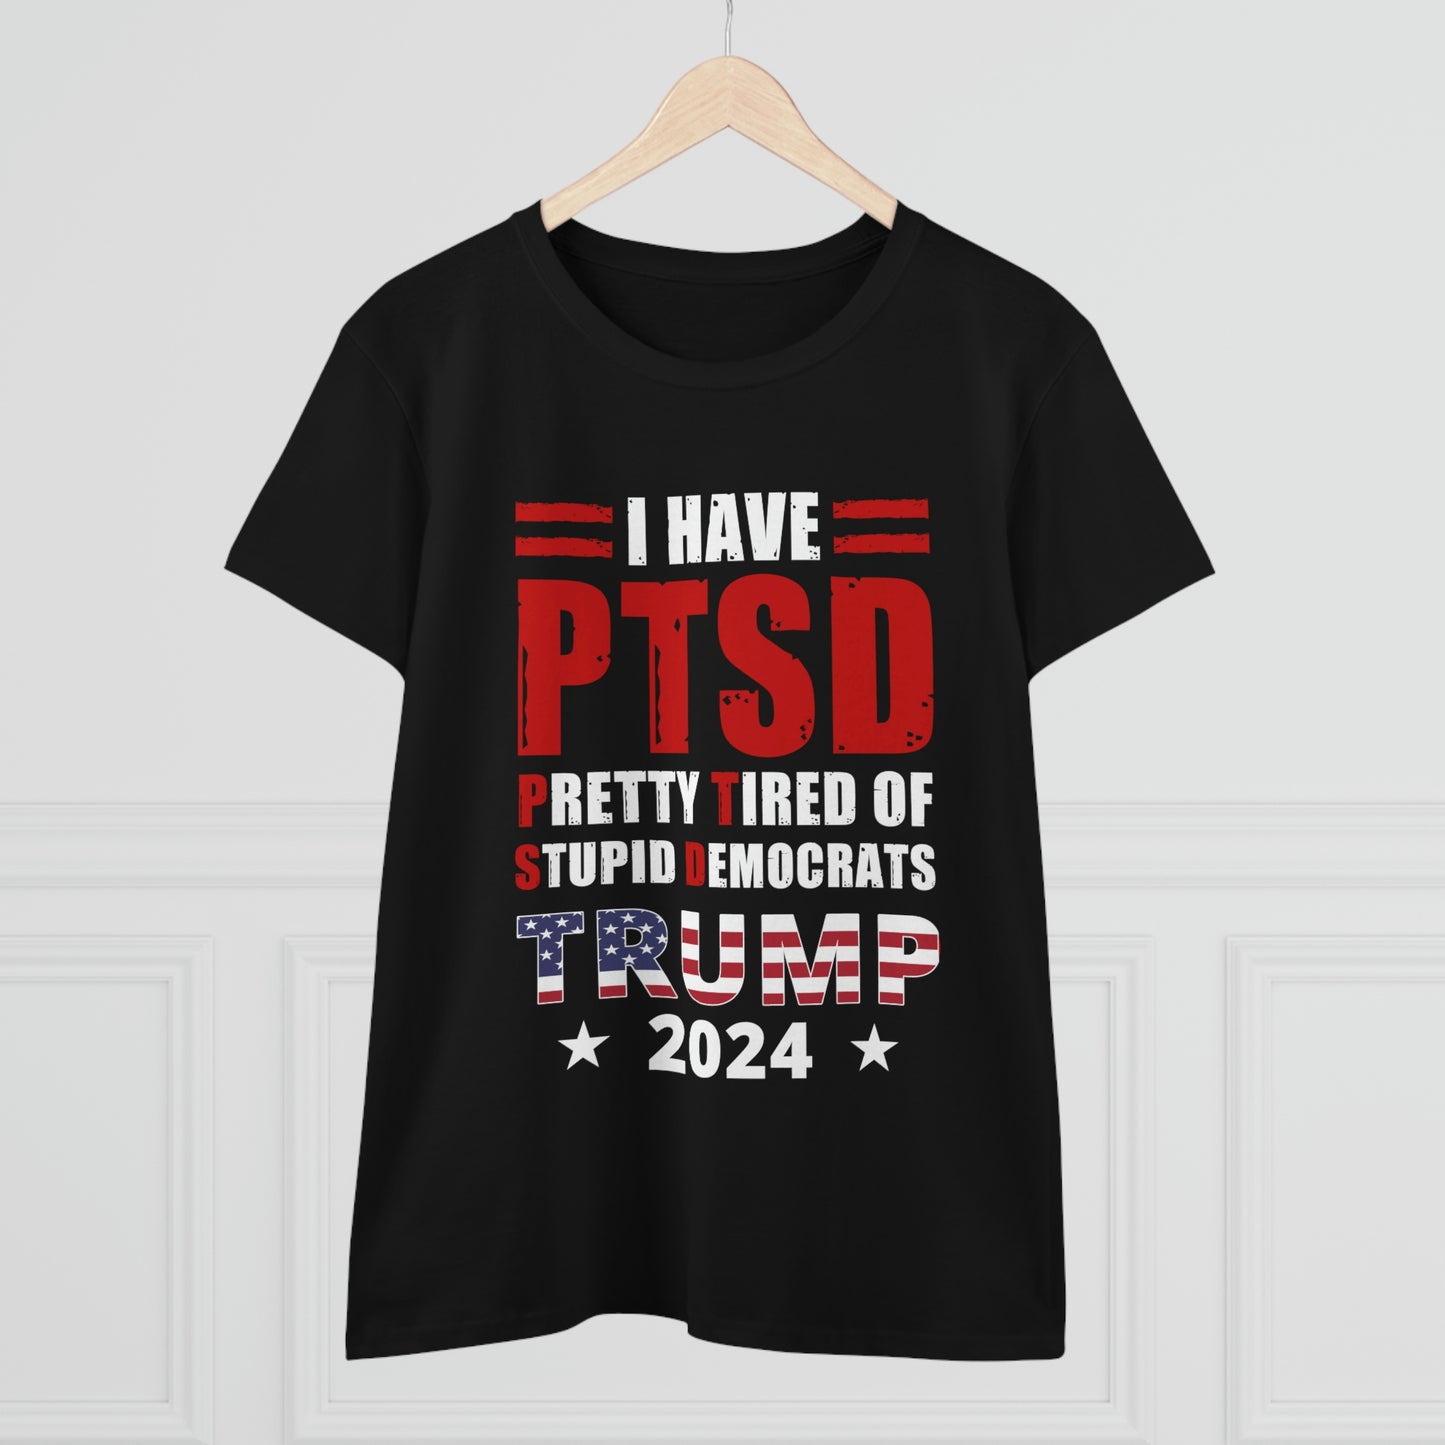 I Have PTSD - Pretty Tired of Stupid Democrats | Women's Tee